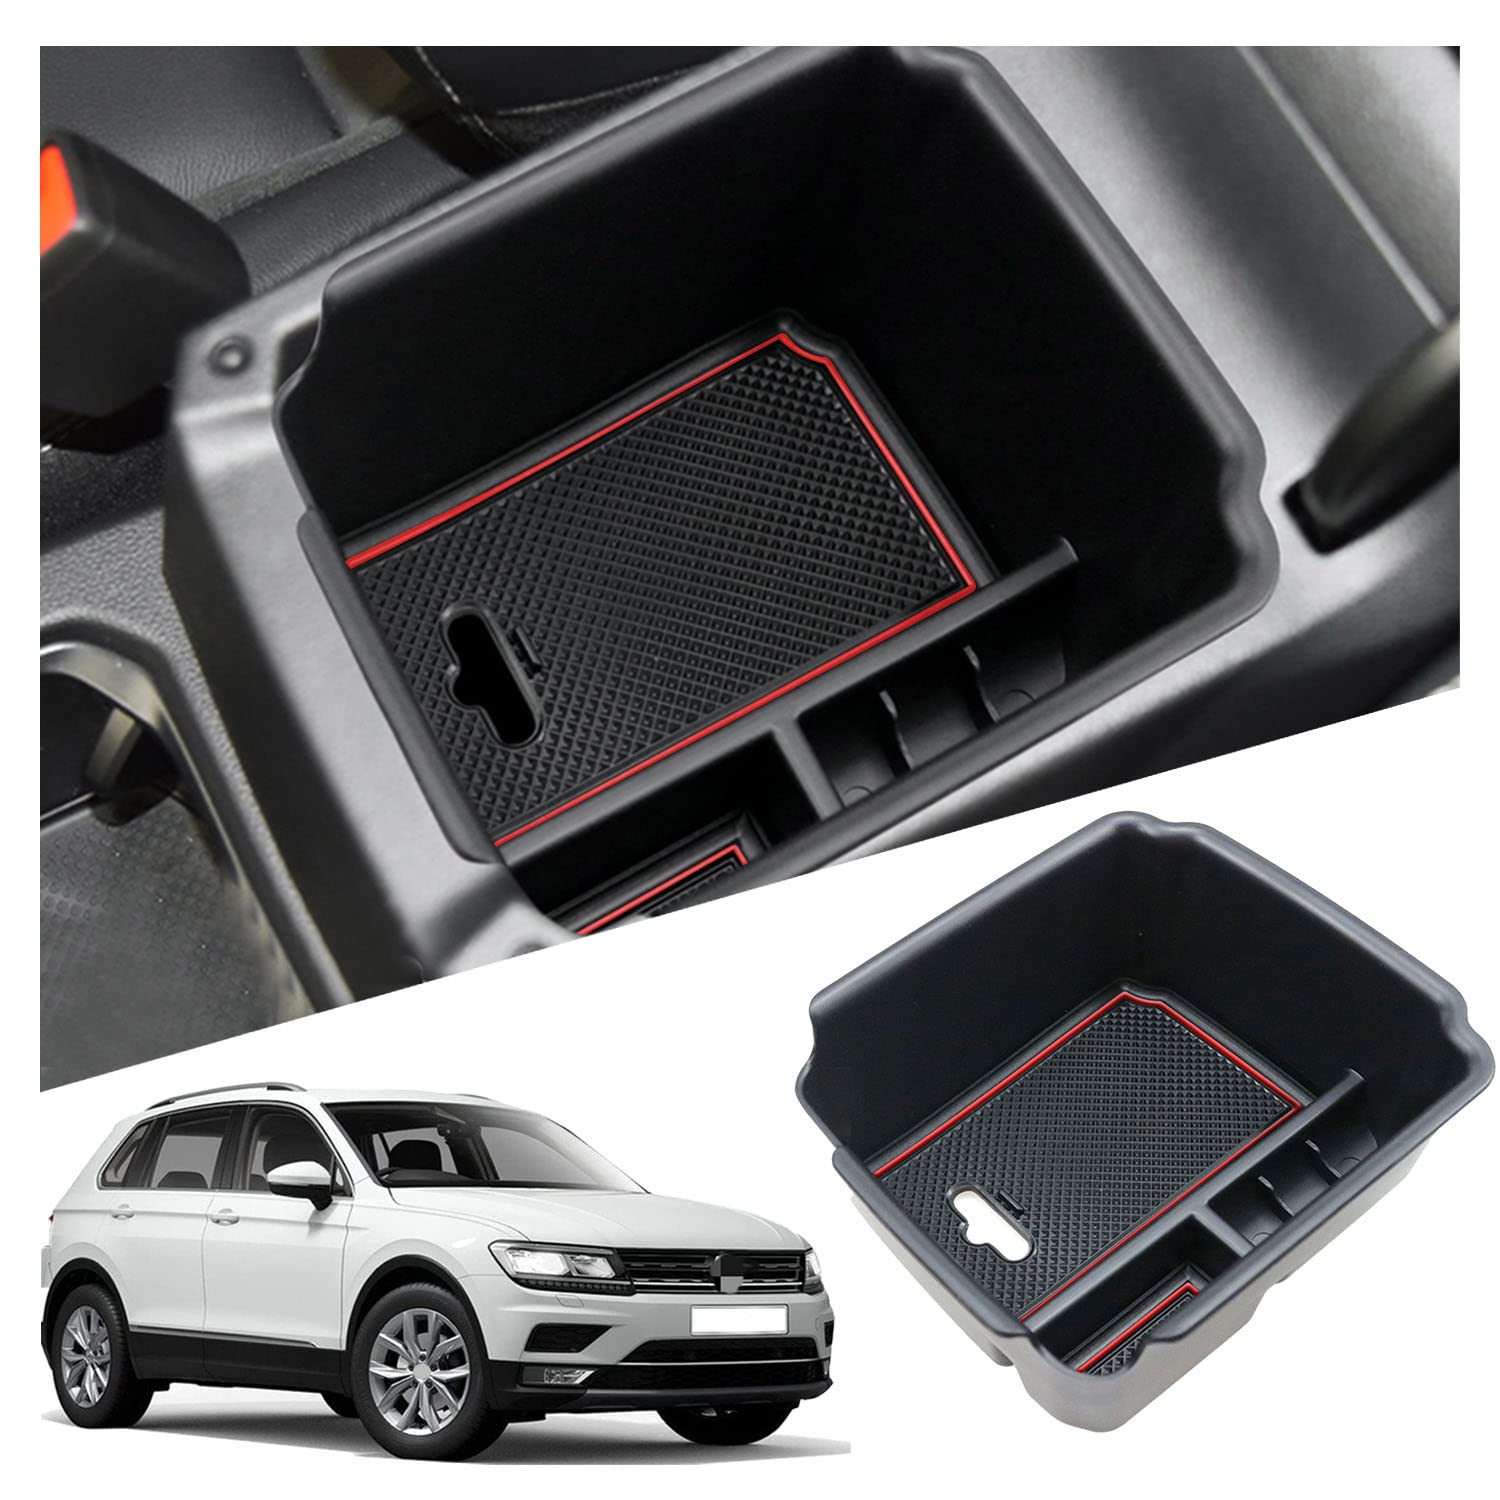 VW Tiguan Allspace Center Armrest Storage Tray 2018+ - LFOTPP Car Accessories